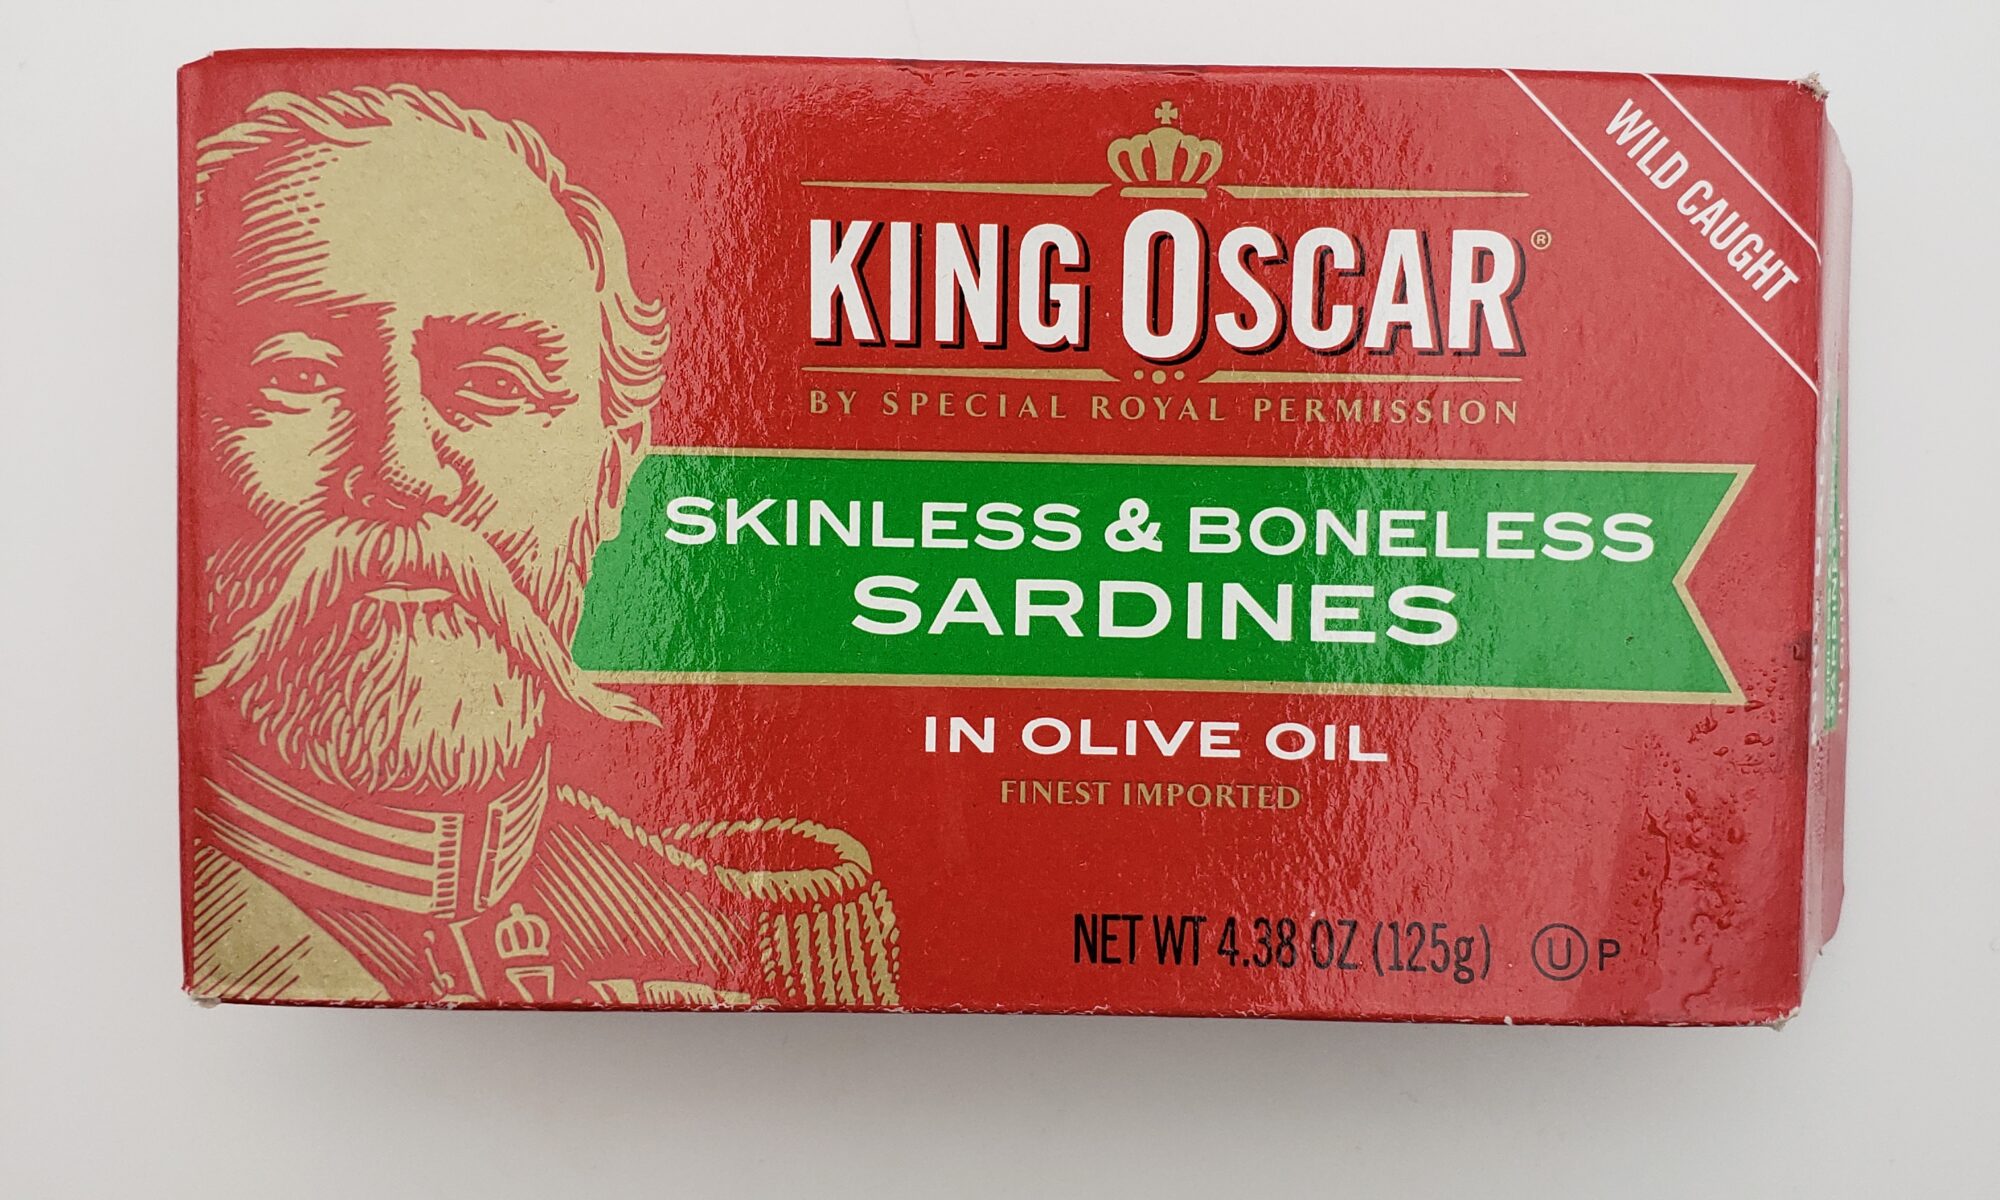 Imagof King Oscar skinless and boneless sardines